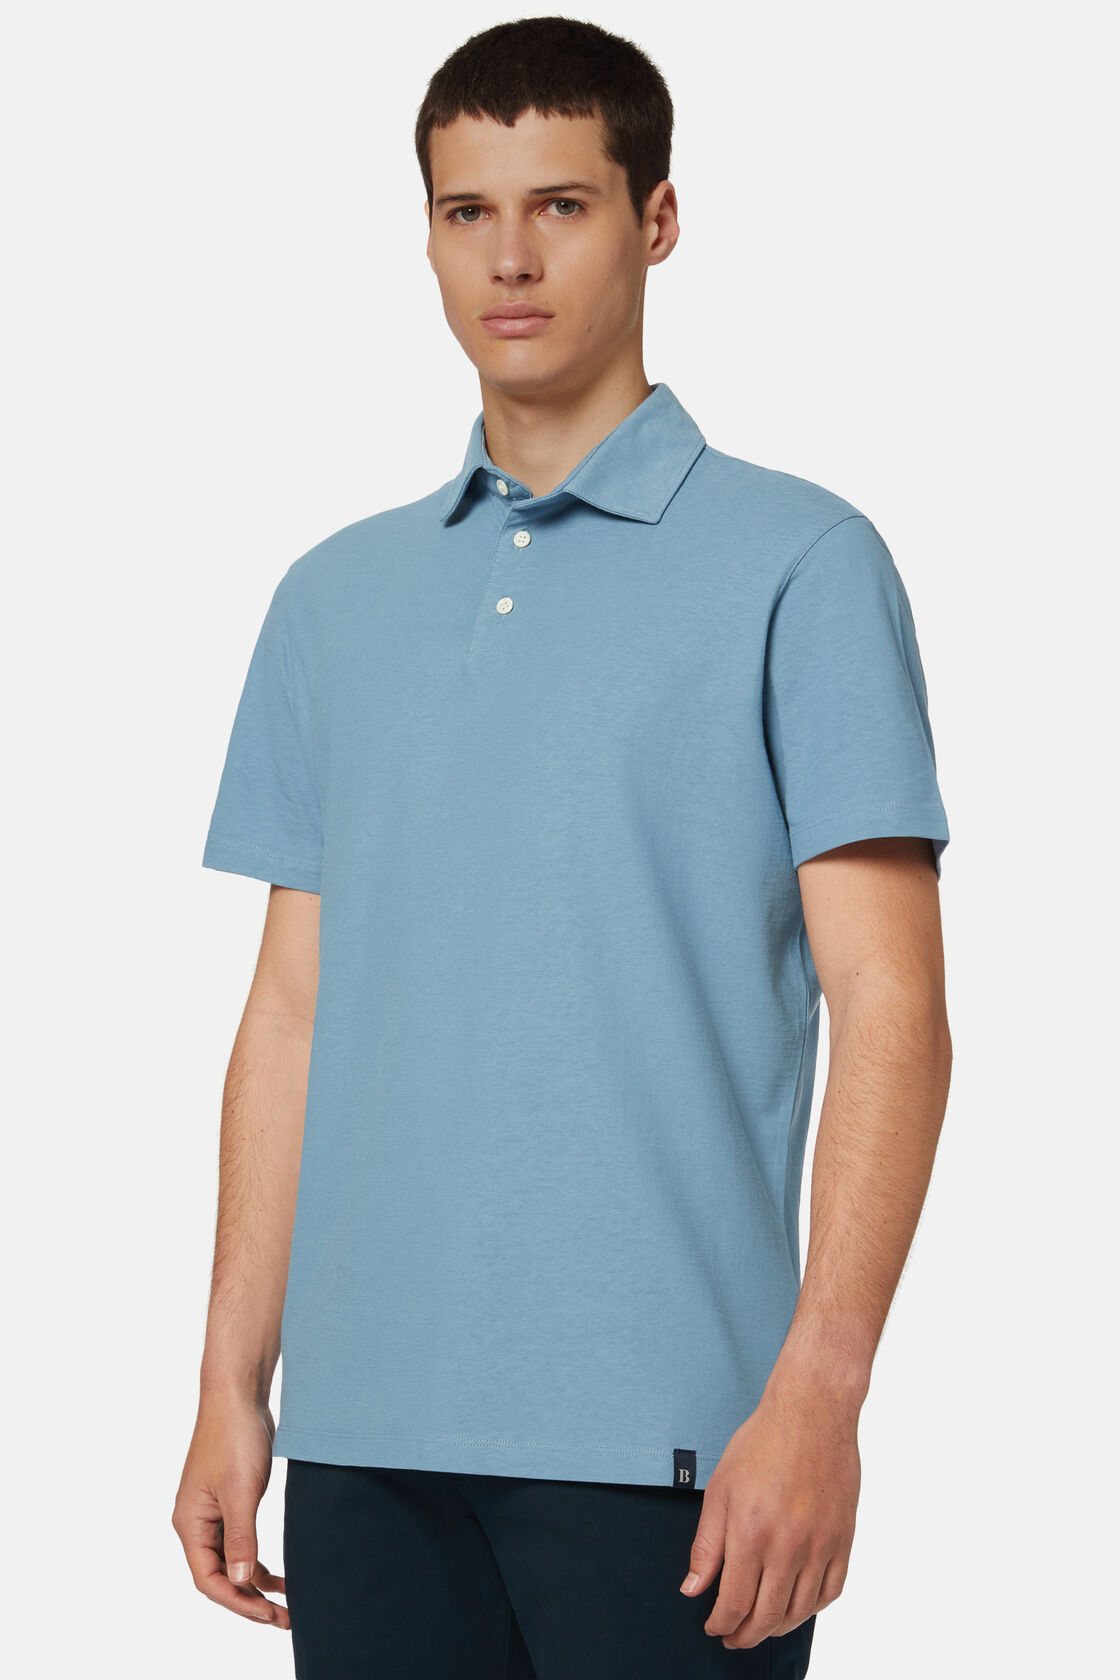 Cotton Crepe Jersey Polo Shirt, Light Blu, hi-res